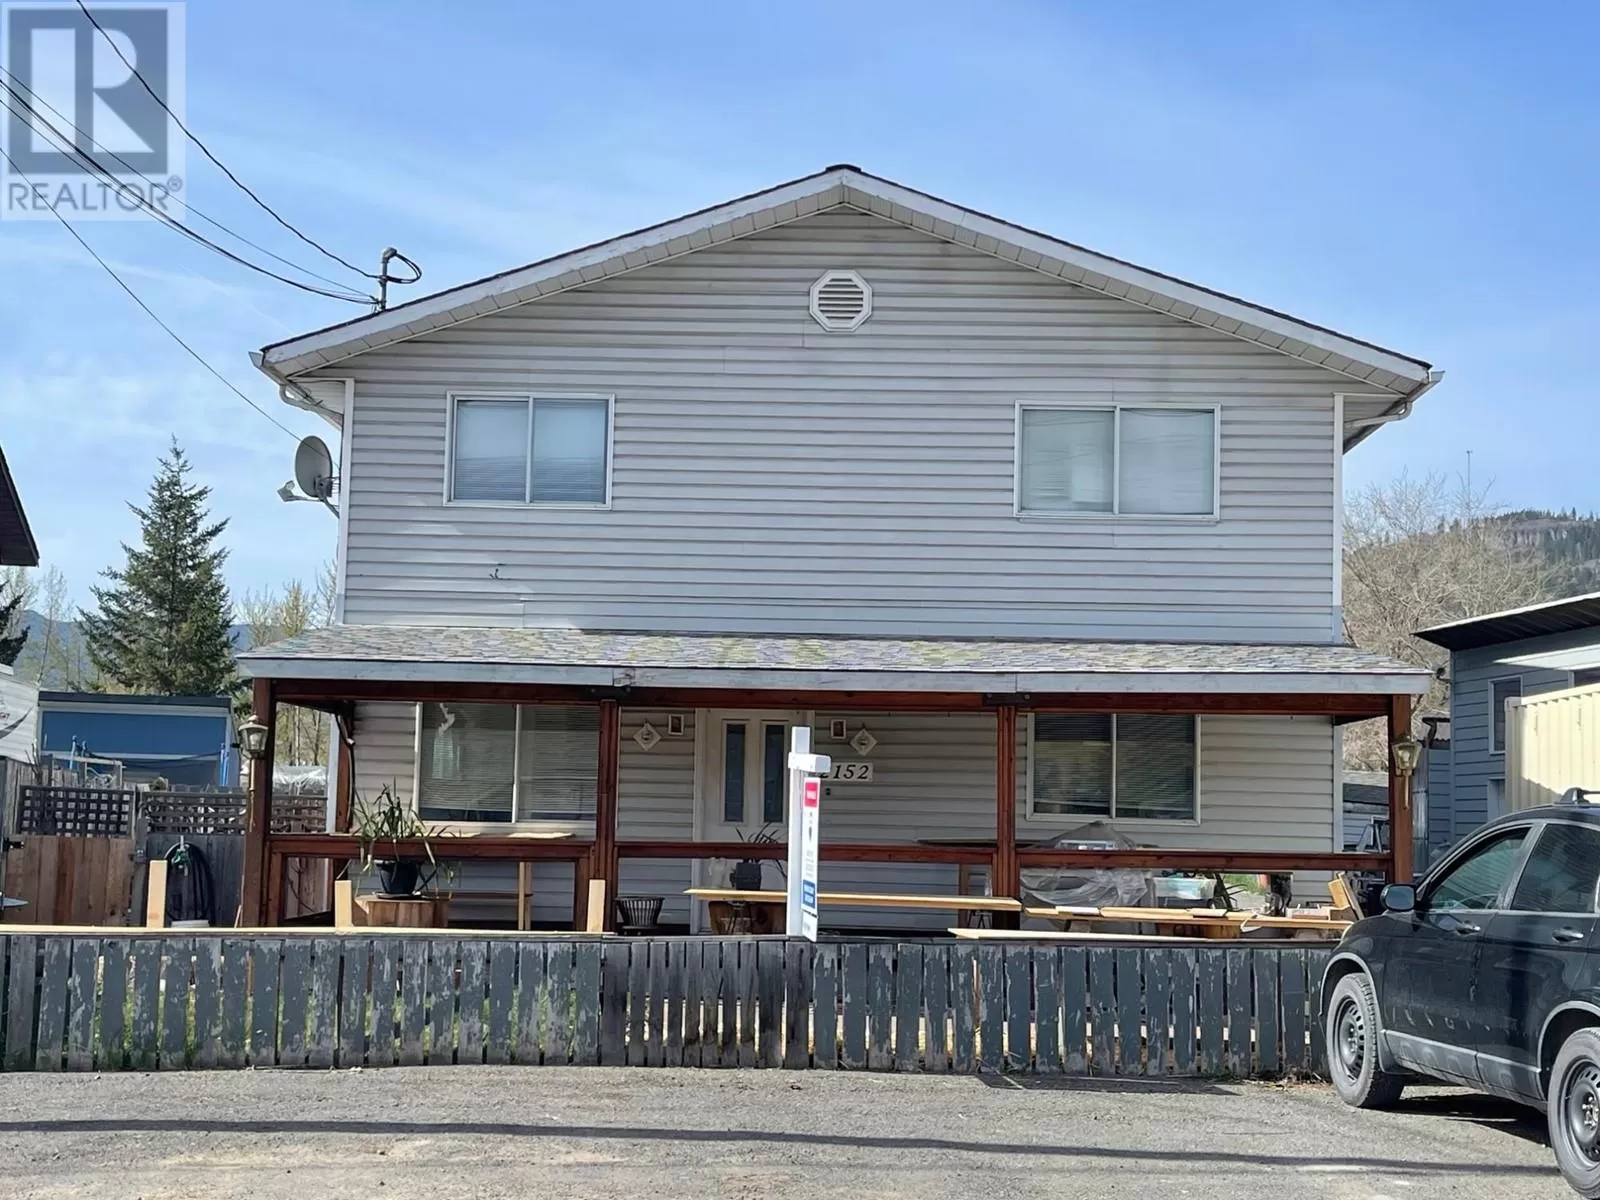 Duplex for rent: 2152 Clarke Ave, Merritt, British Columbia V1K 1B8